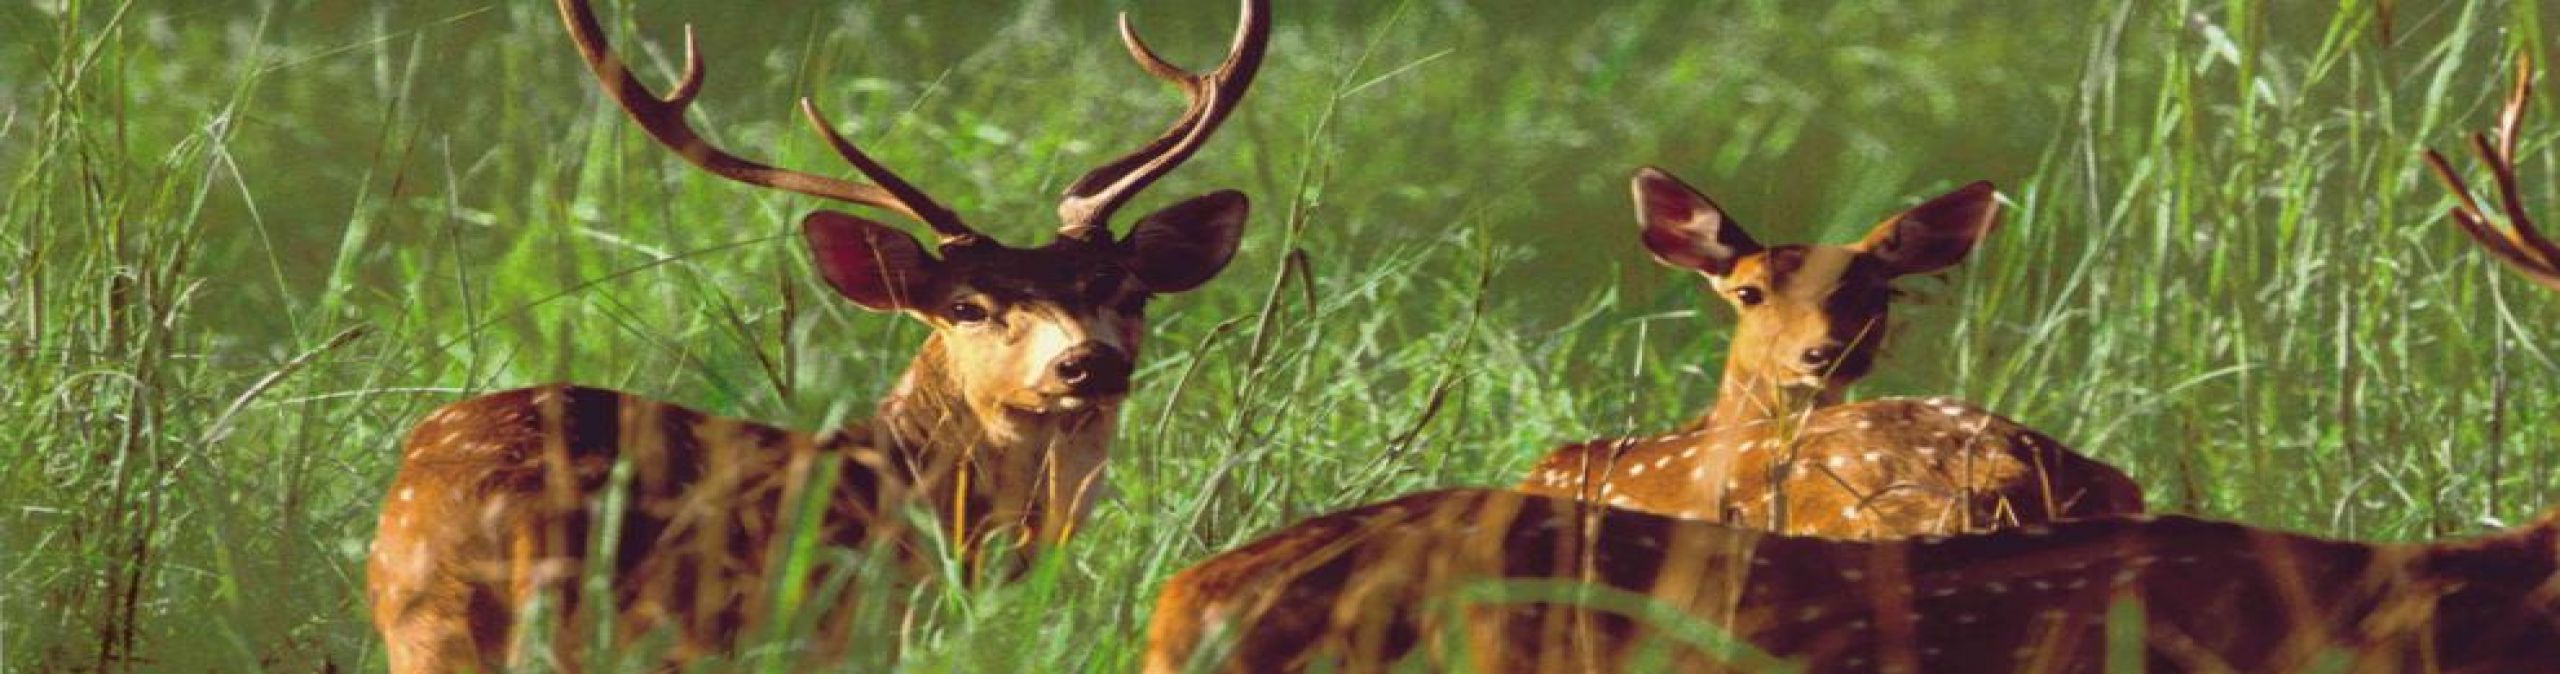 Chital deer
Photographer: DNRM